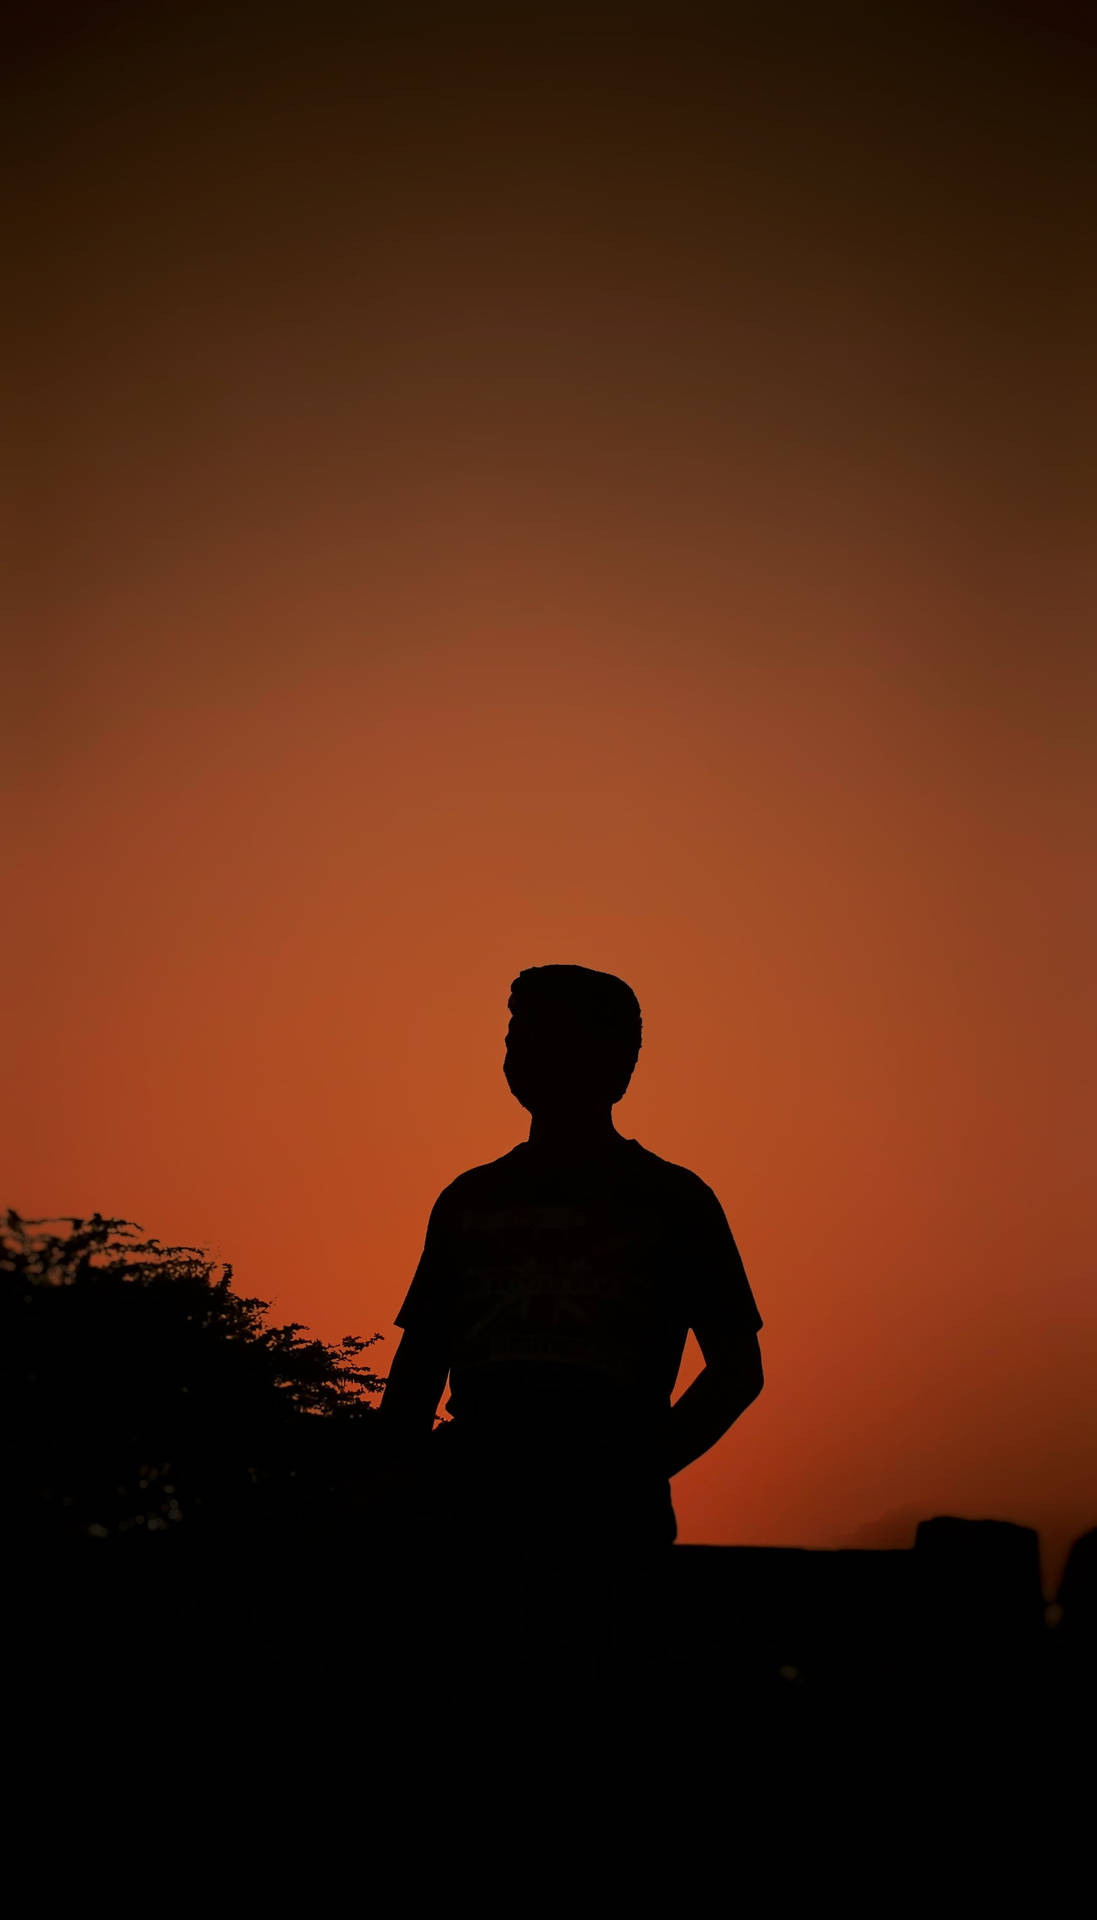 Boy Shadow On An Orange Sunset Sky Background